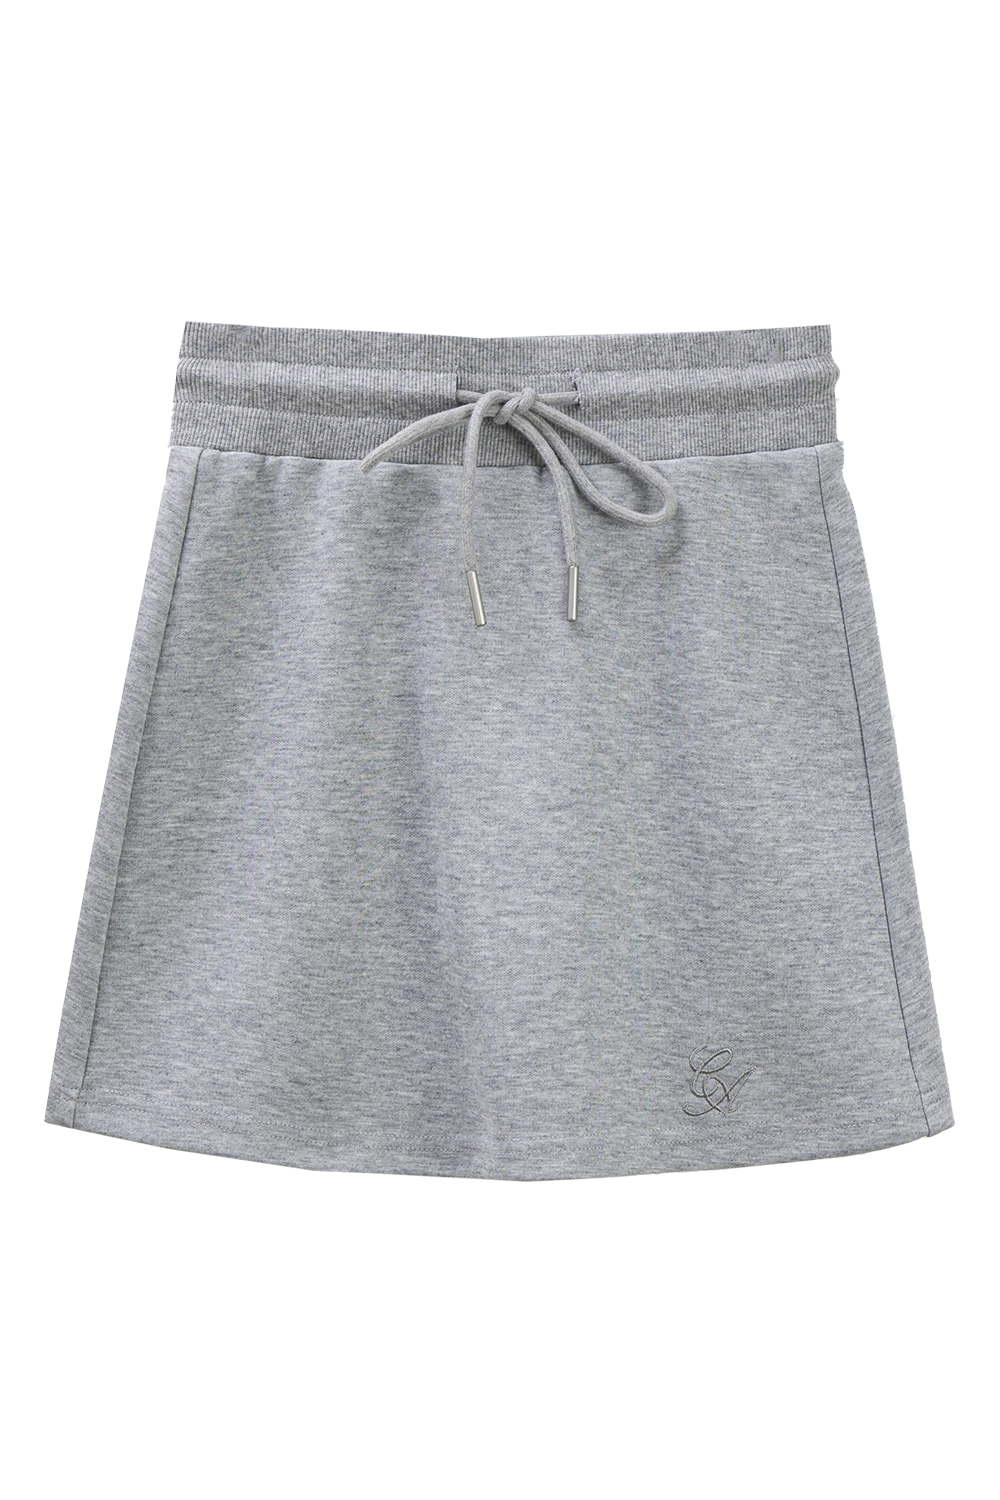 Women's Casual Drawstring Waist Mini Skirt